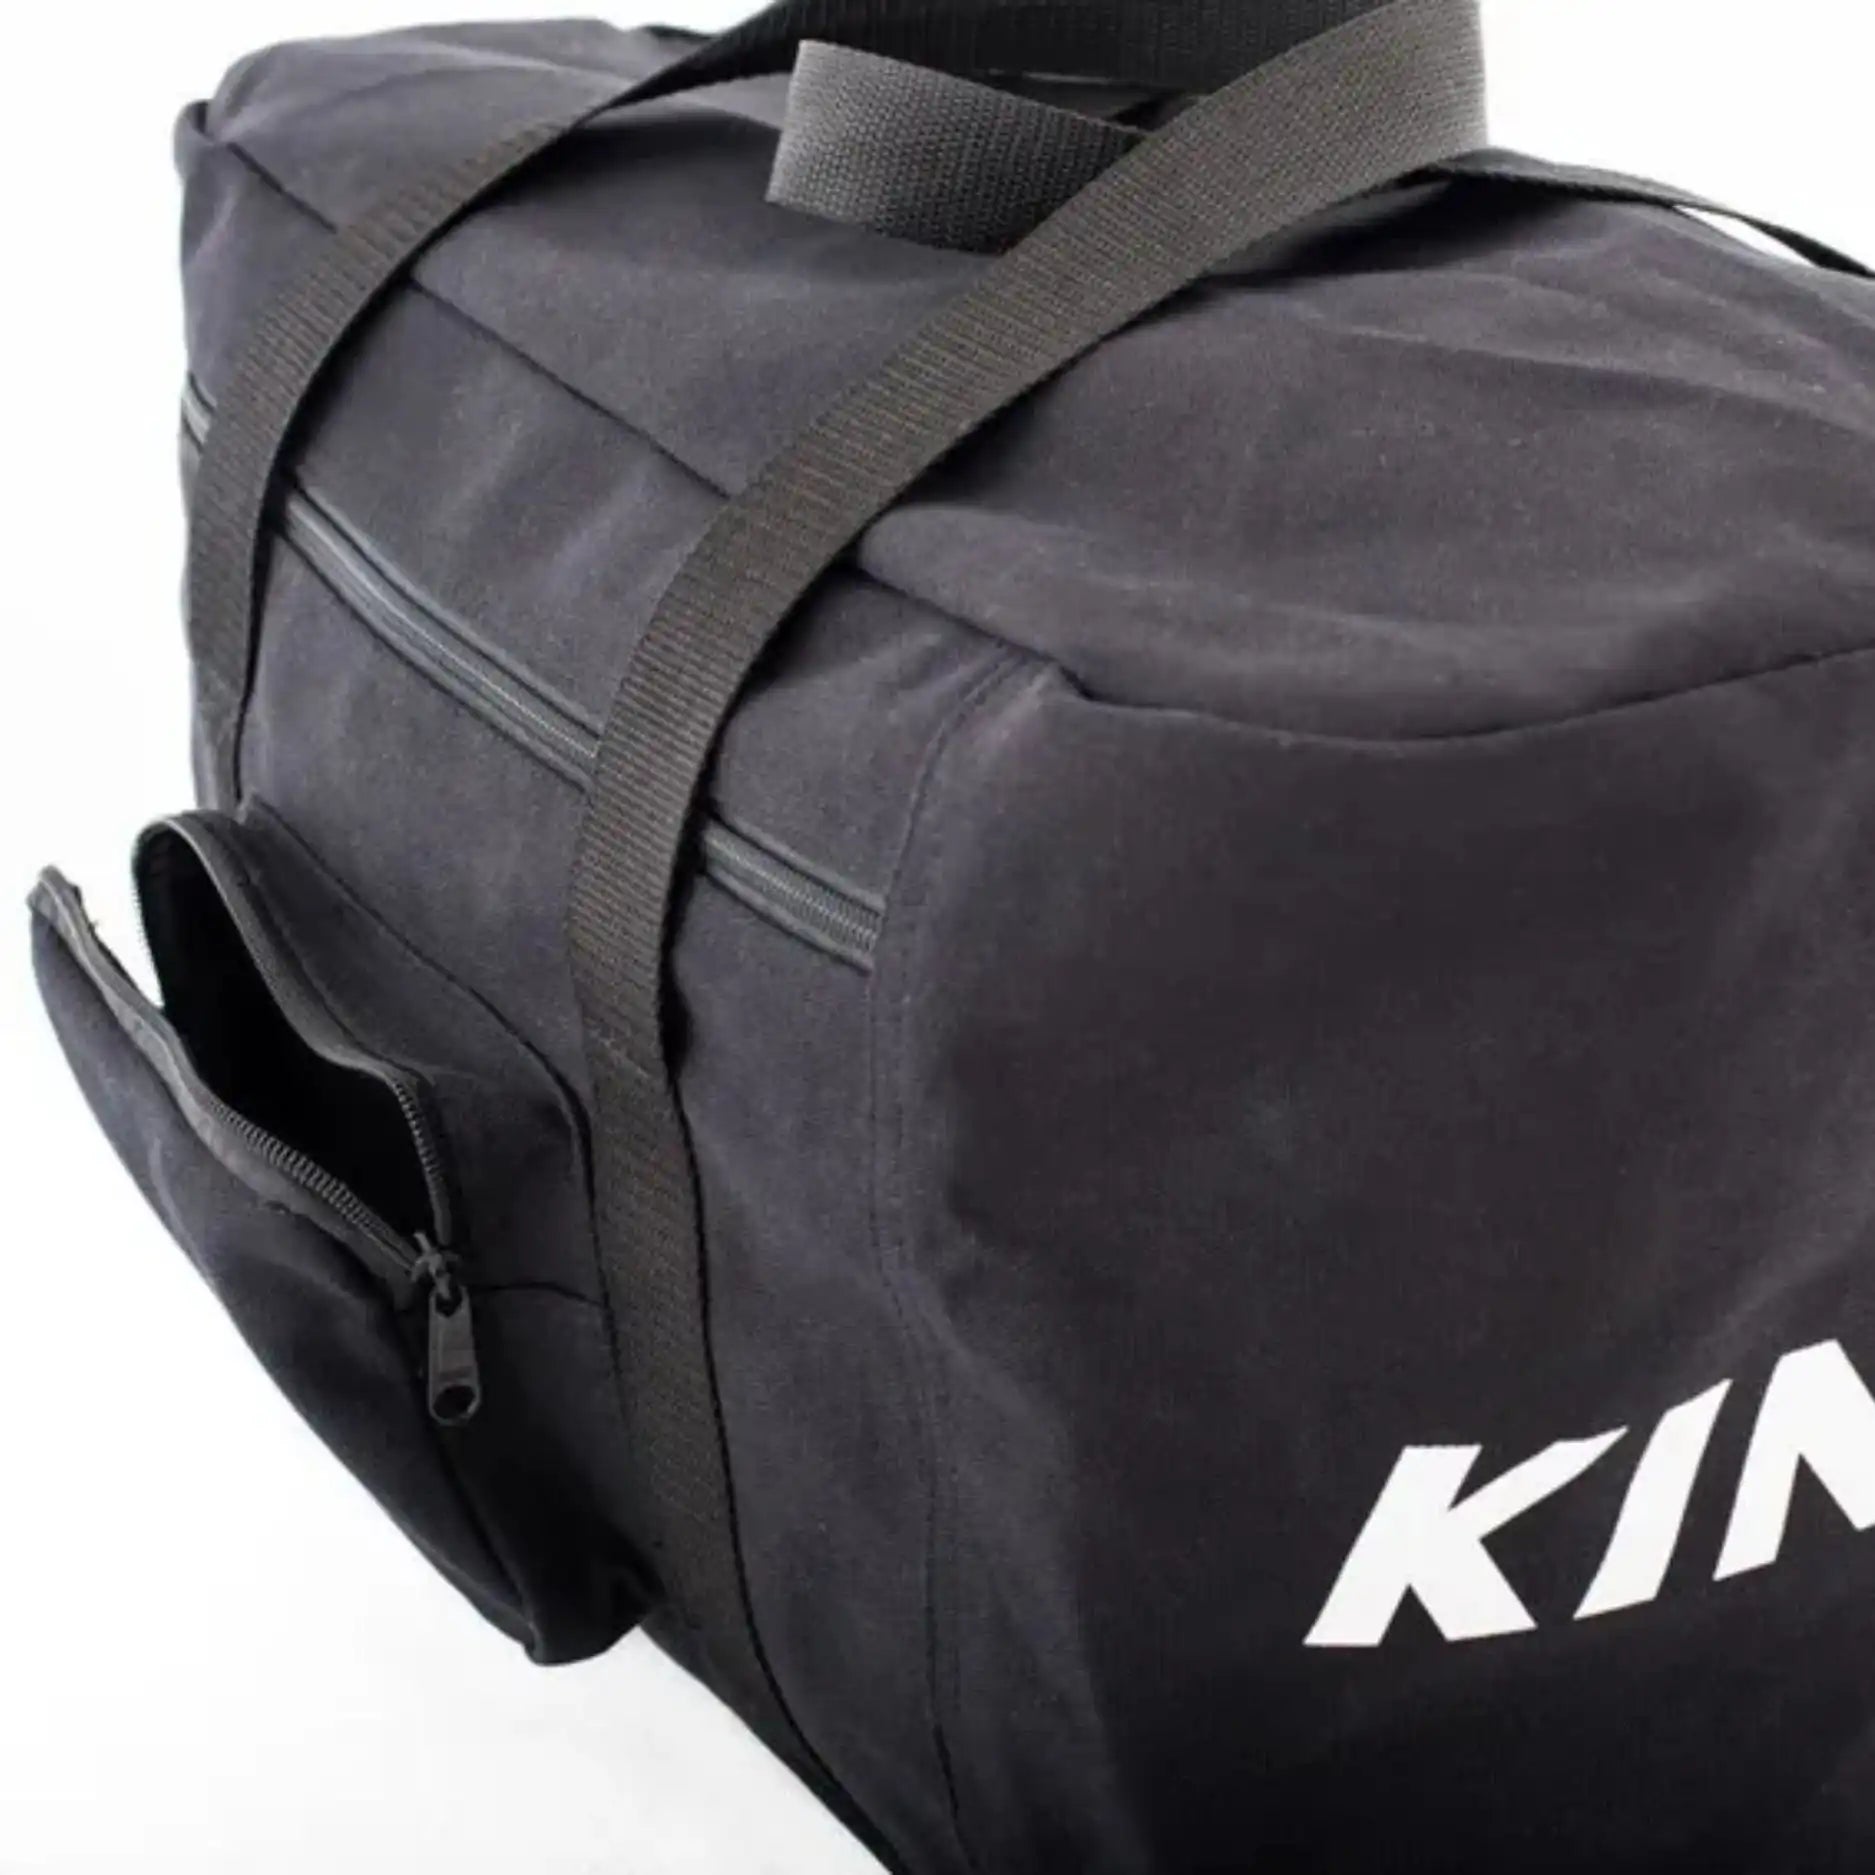 Adventure Kings Heavy-Duty Duffle Bag  40L Capacity